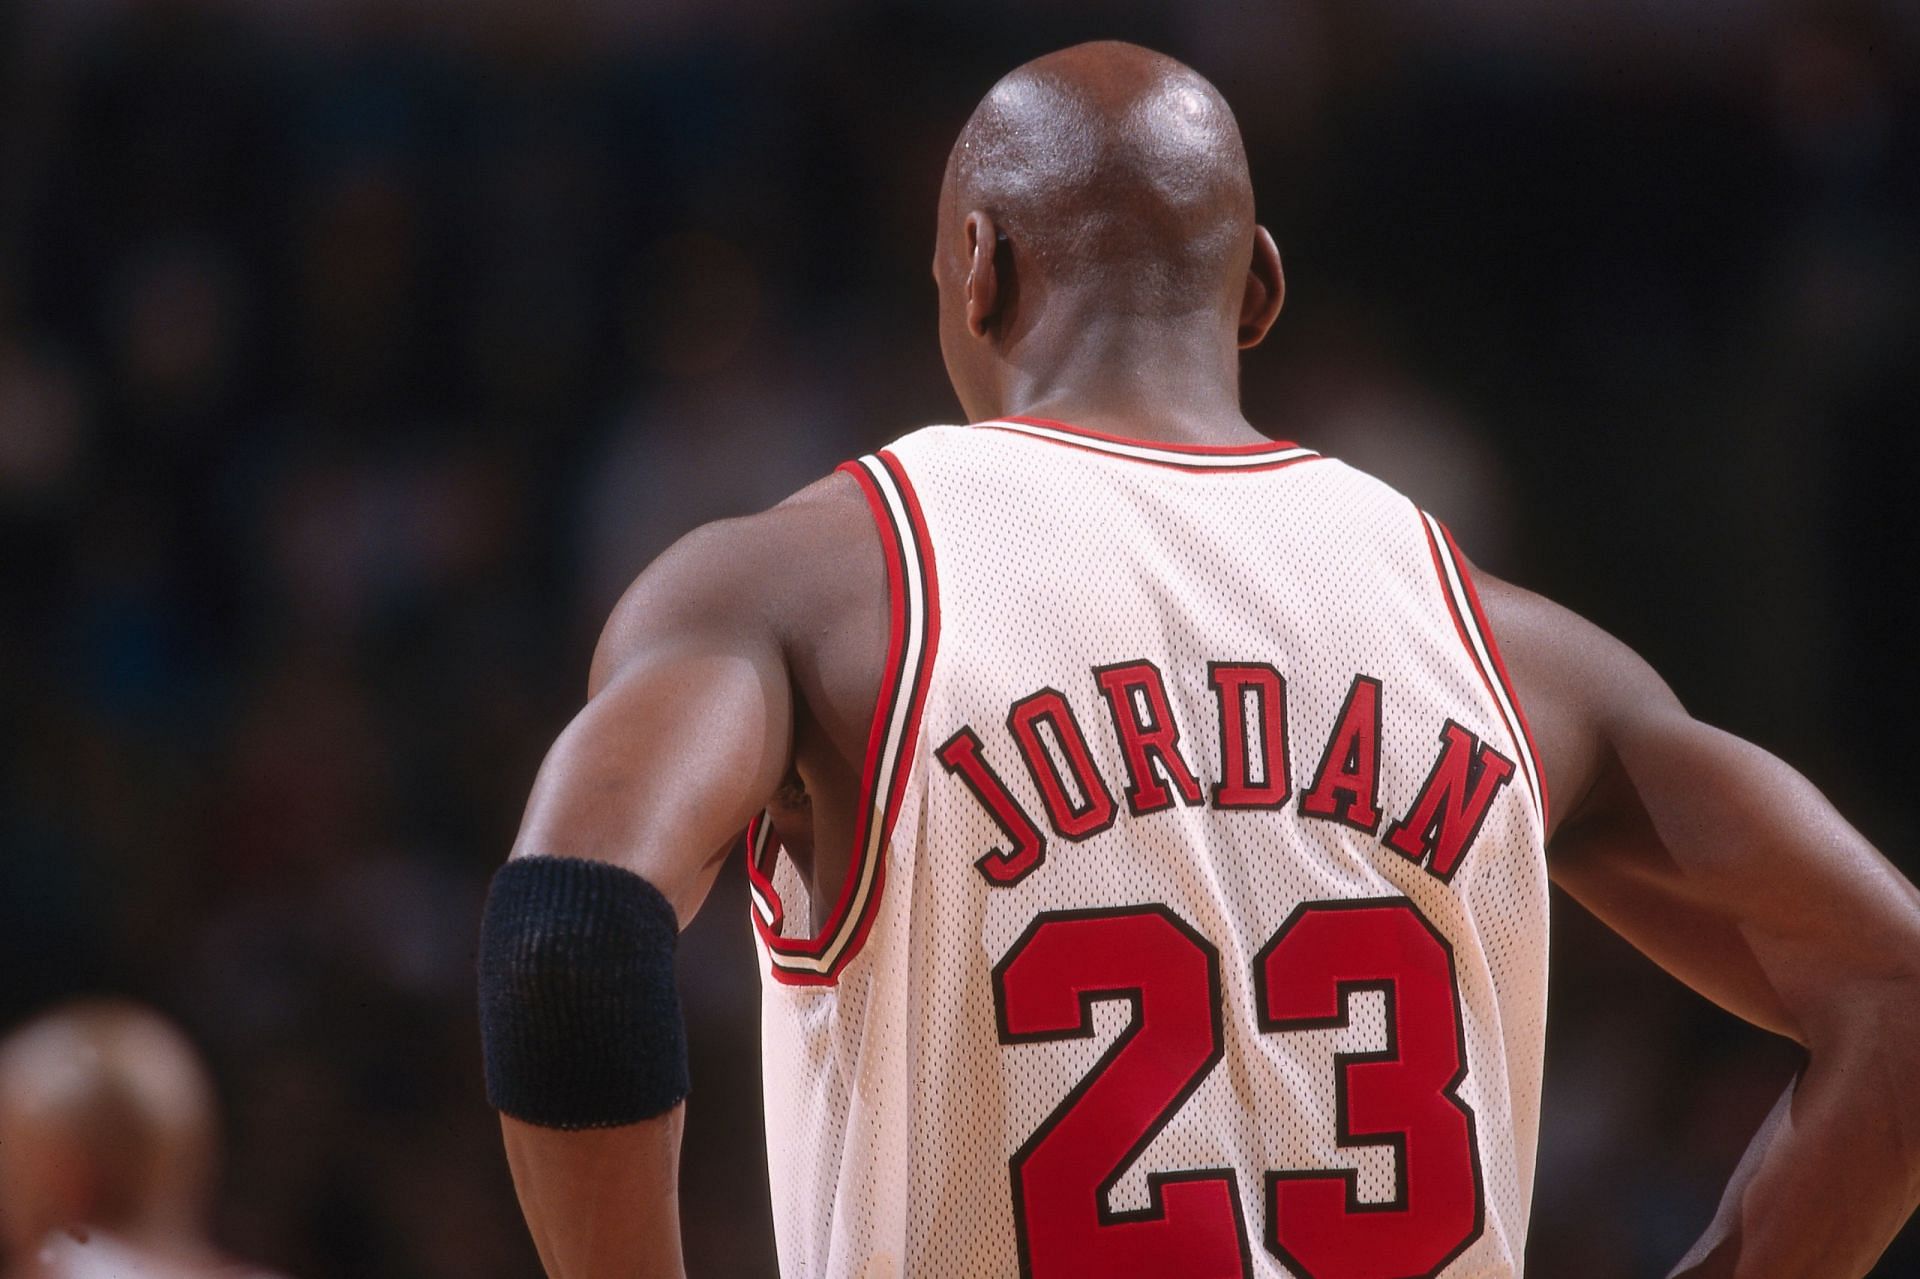 NBA legend and Chicago Bulls superstar Michael Jordan.